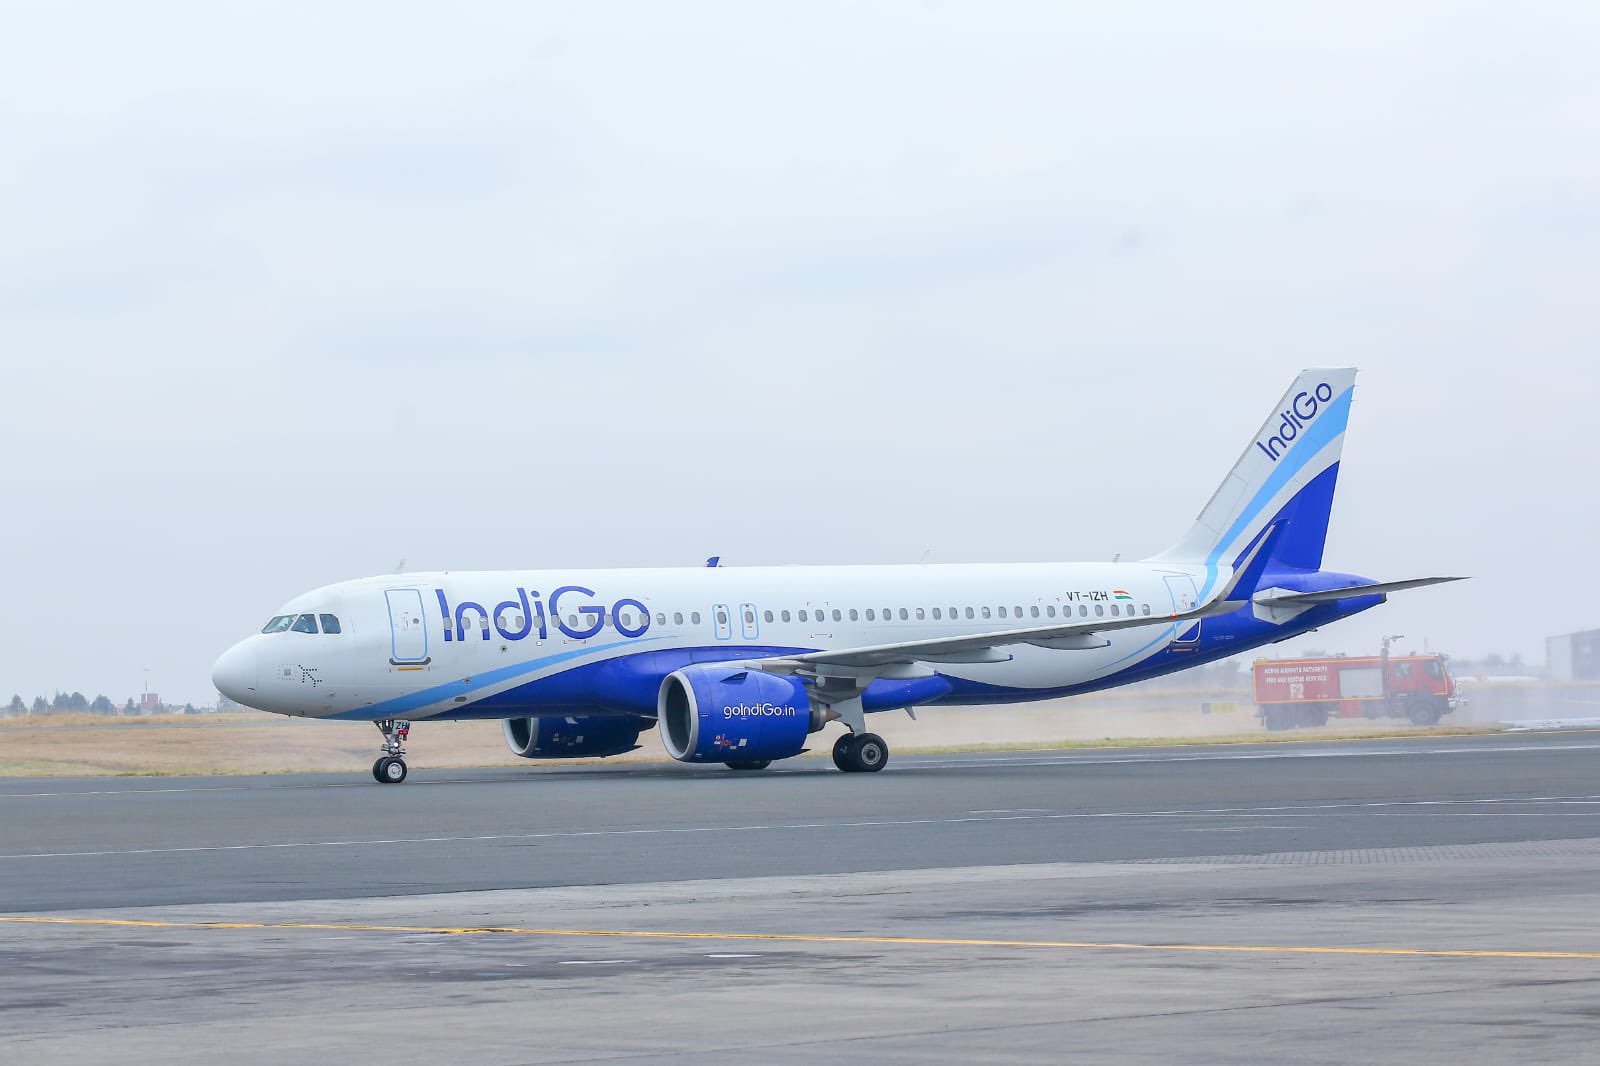 IndiGo Air at one of the runways in Jomo Kenyatta International Airport, Nairobi.